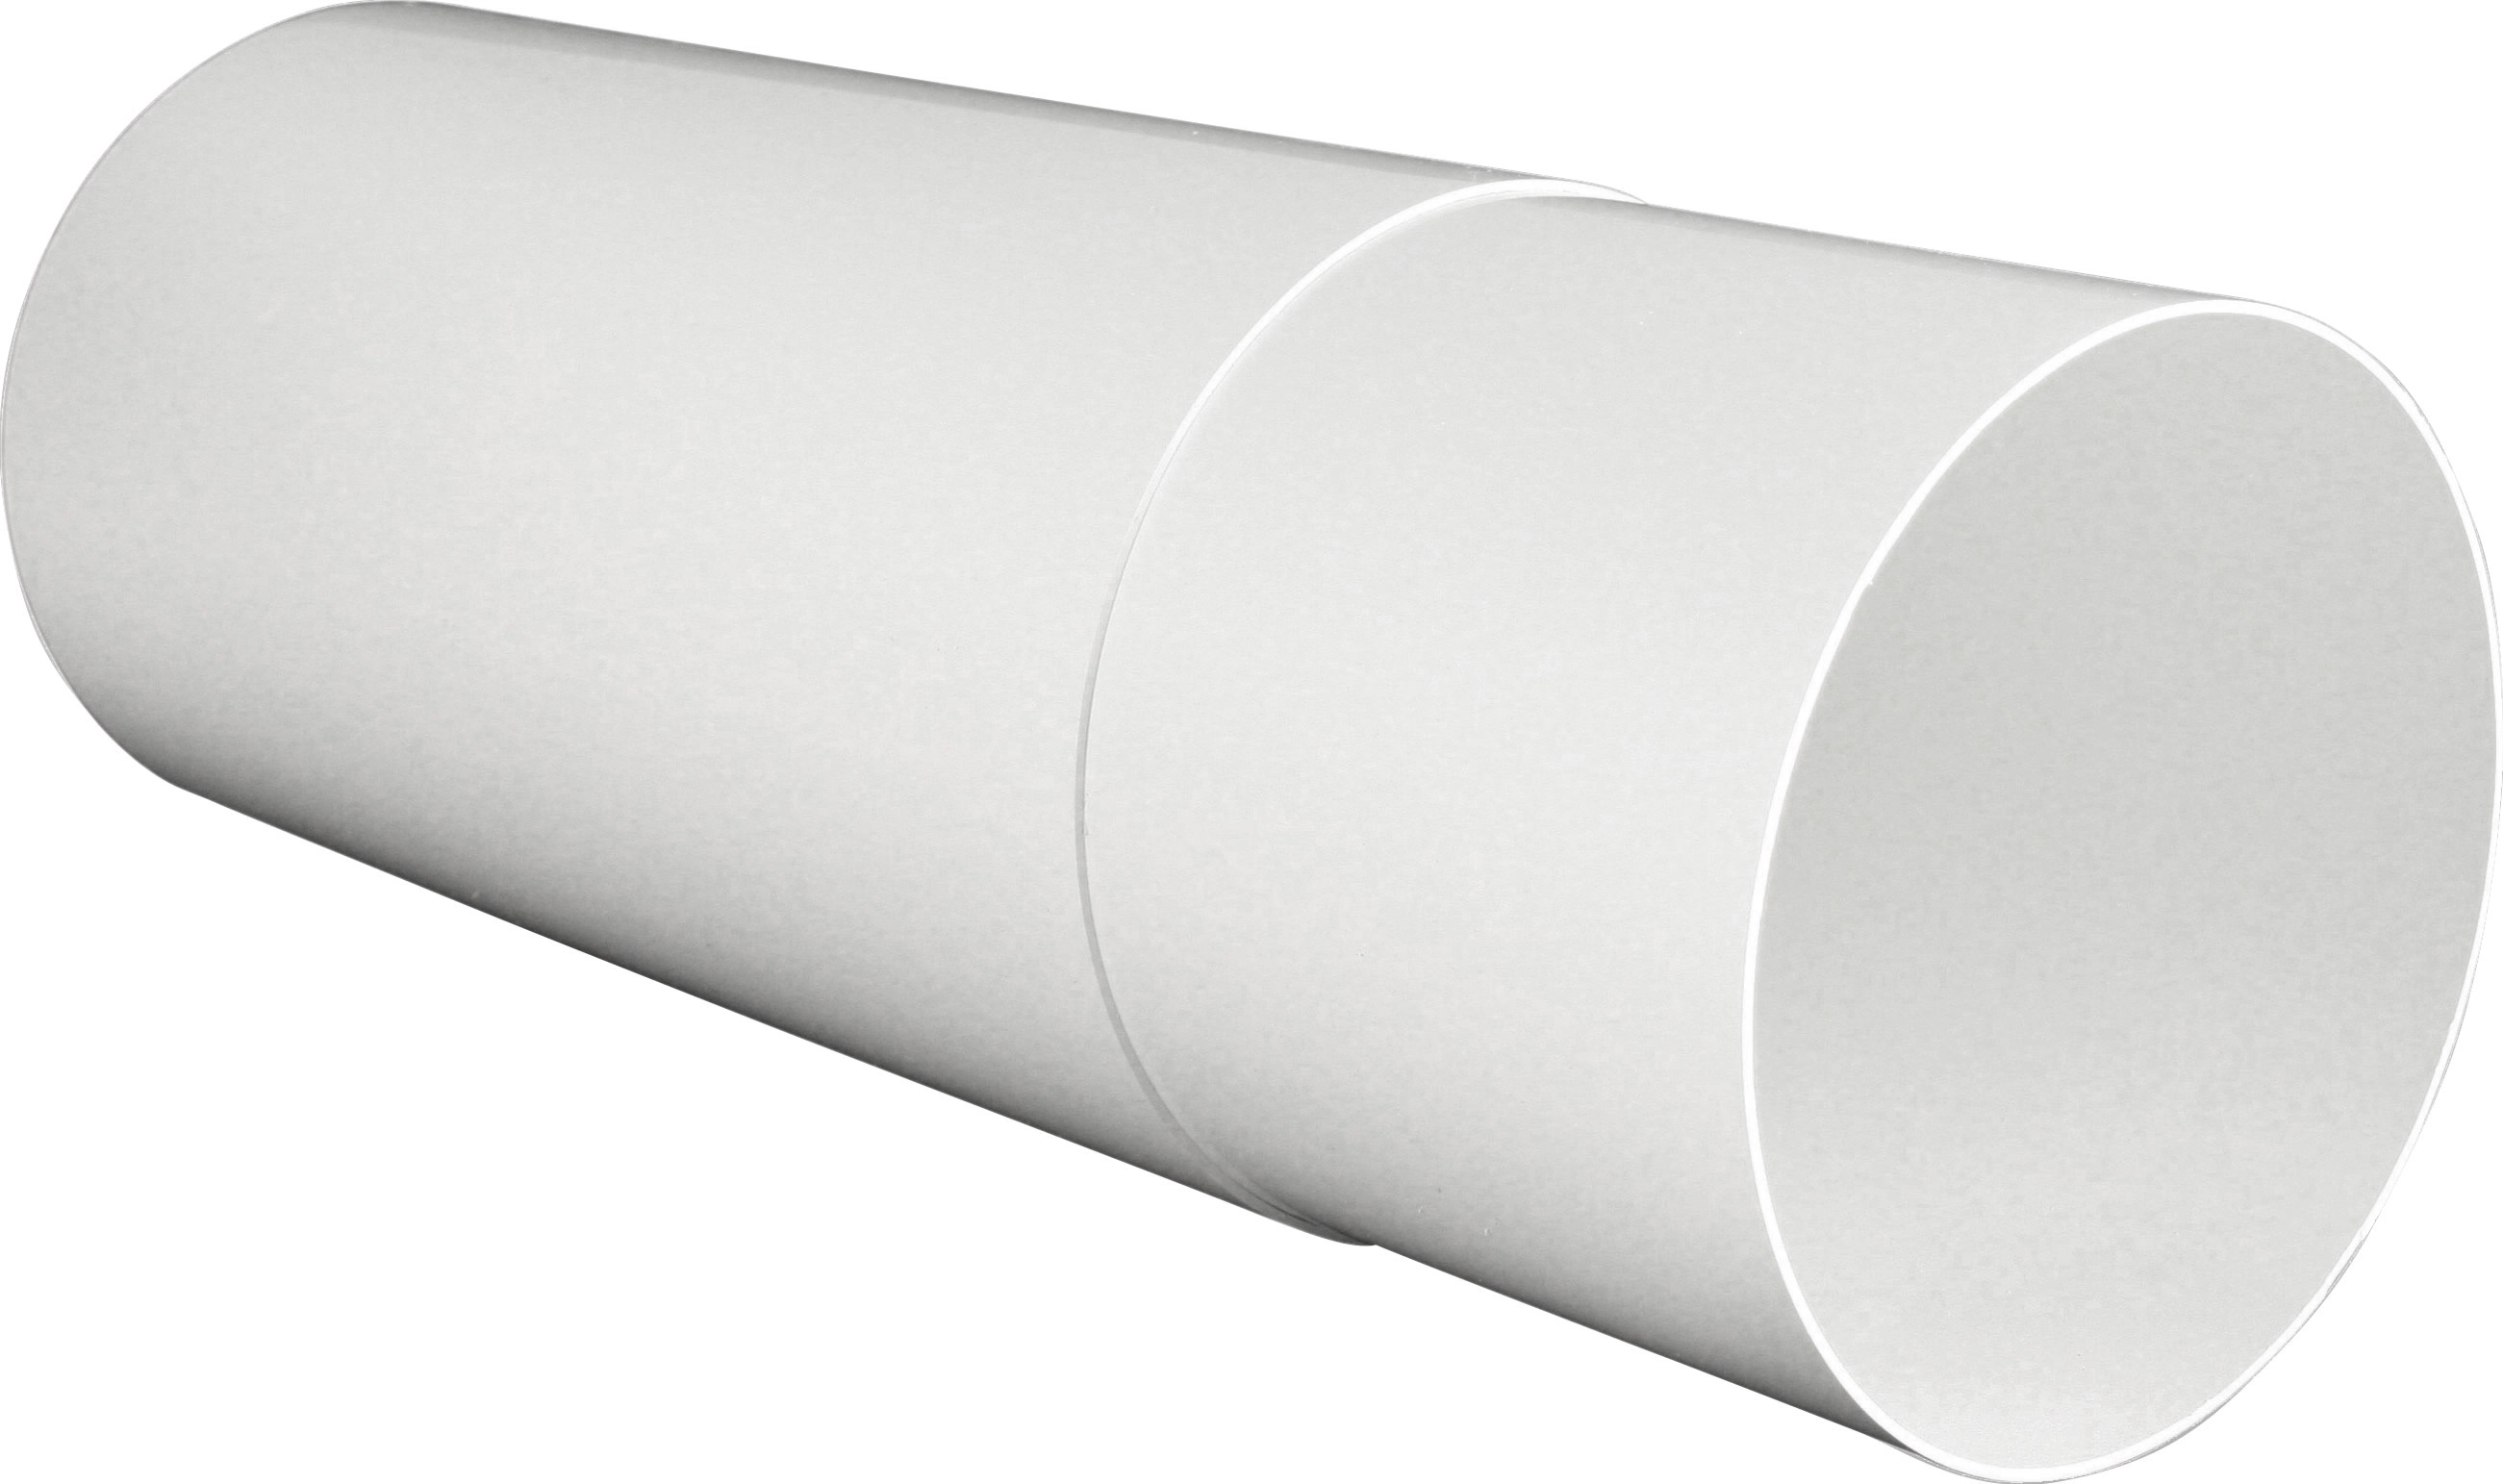 Marley Grille de ventilation ronde dans tube Blanc 190 x 150 mm